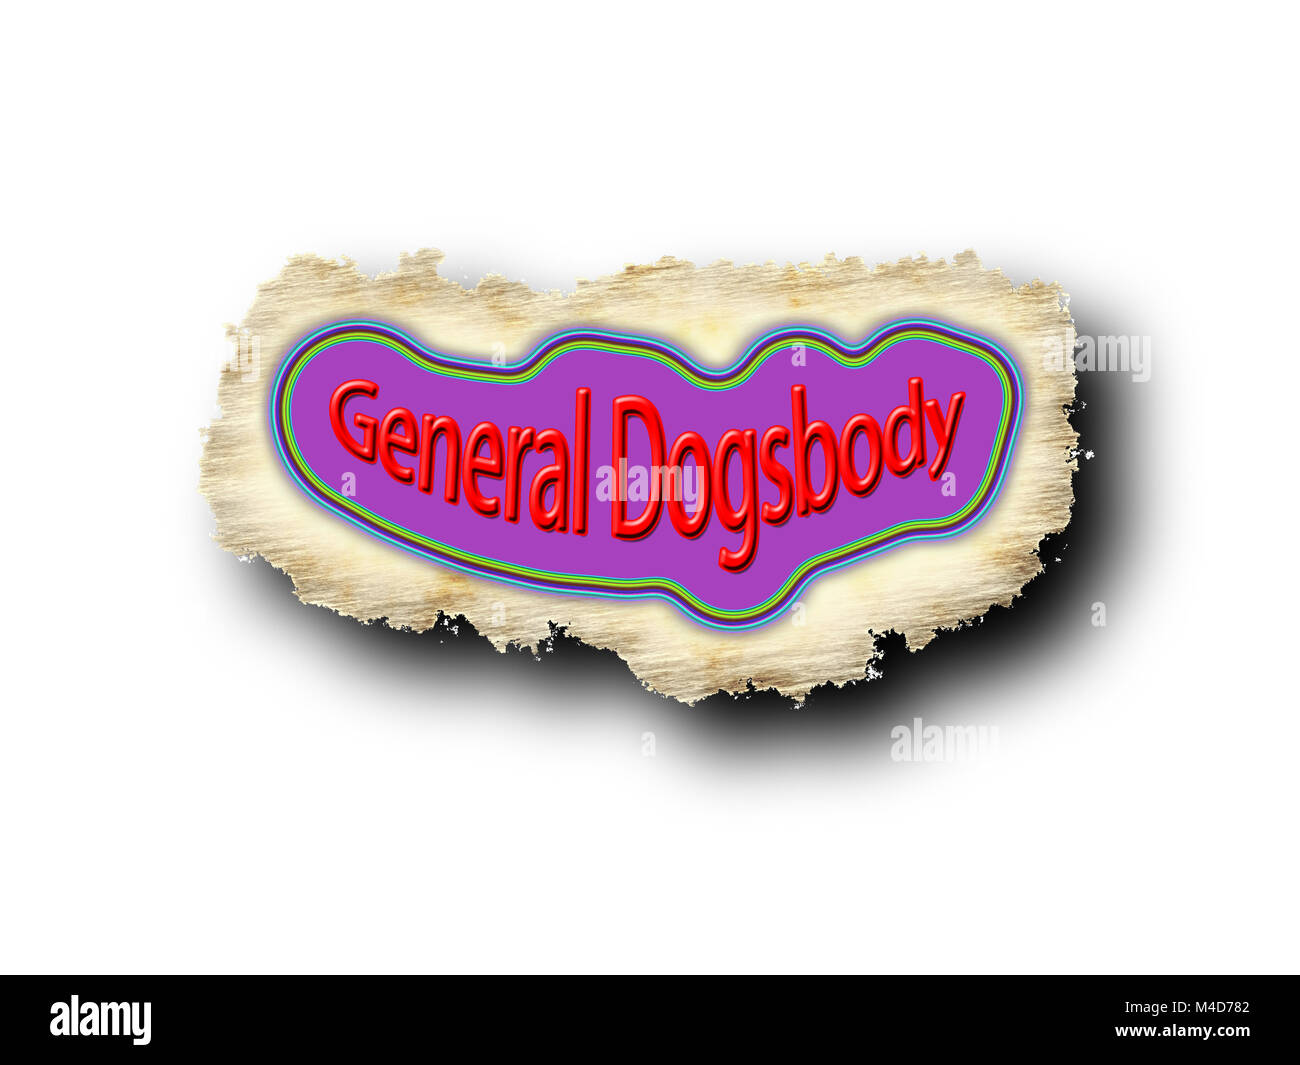 Sagen General dogsbody Stockfoto